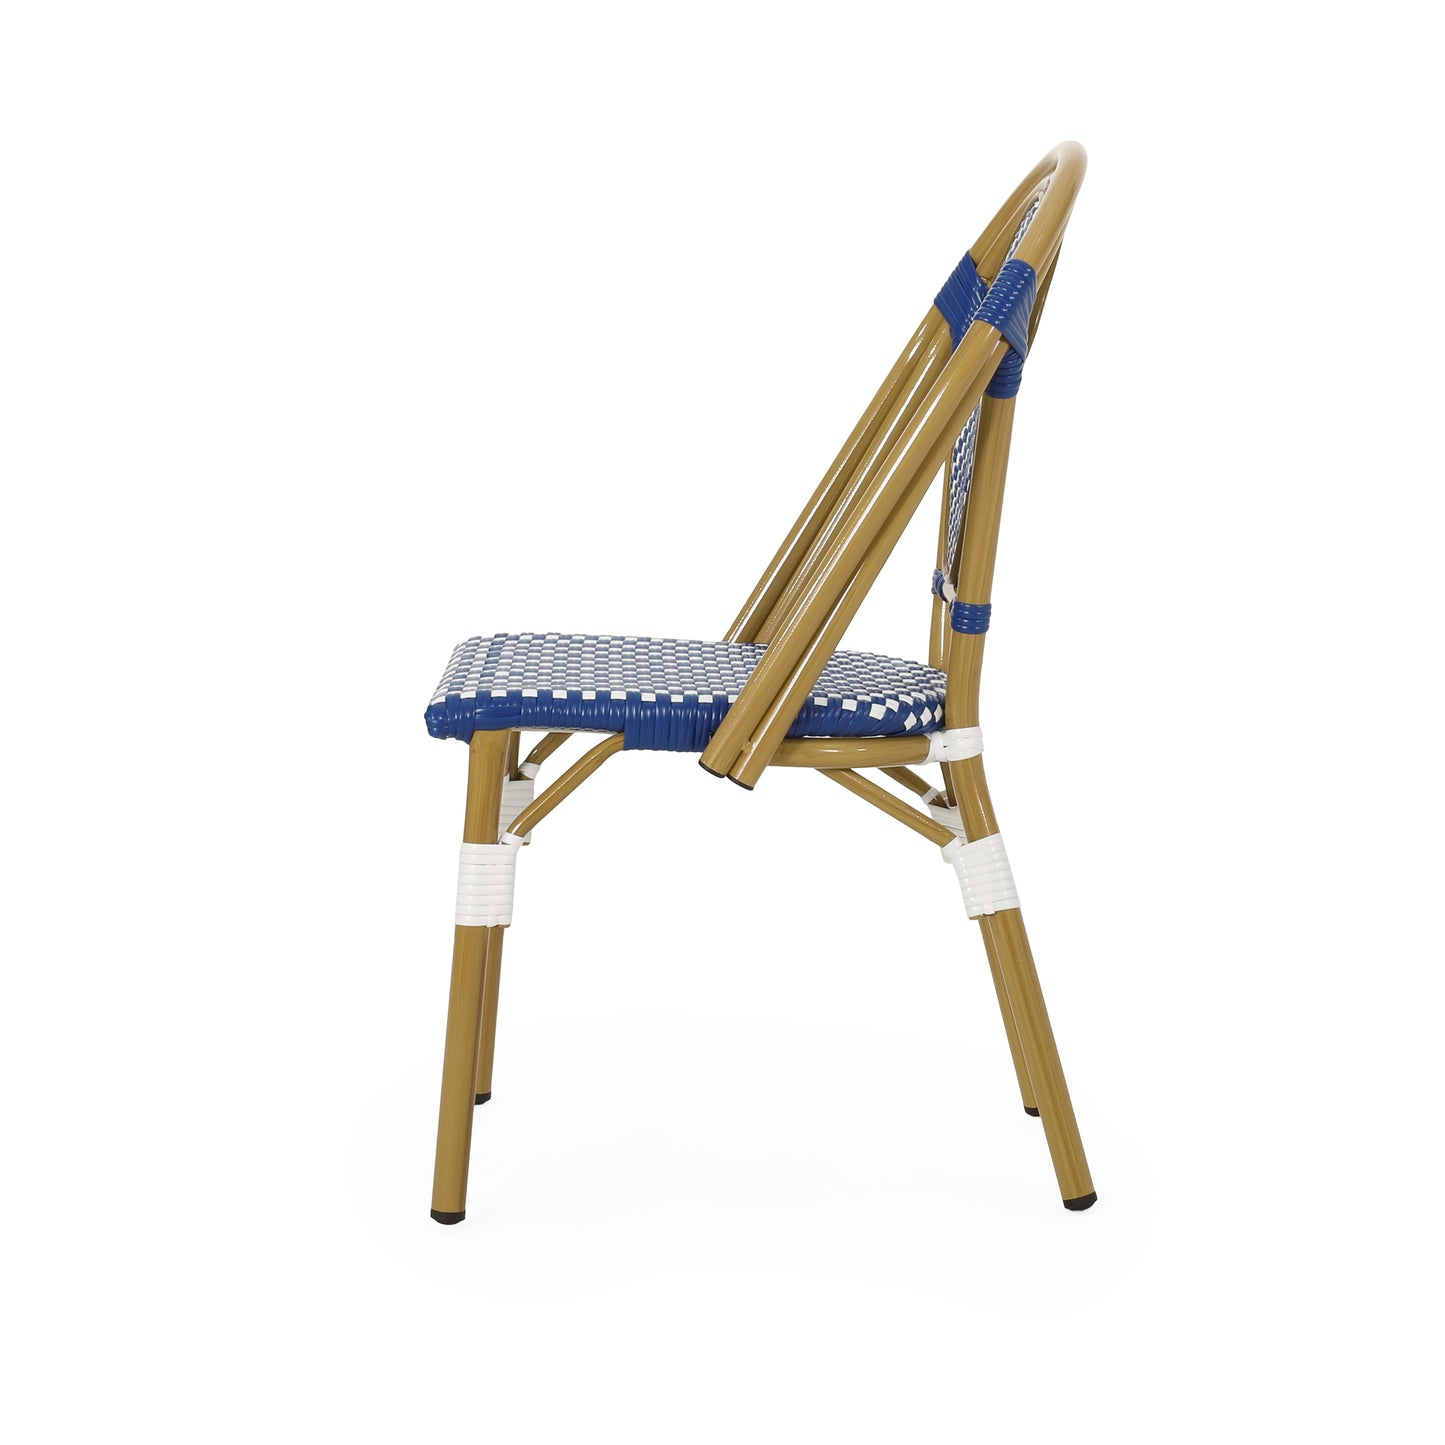 Kazaria Outdoor French Bistro Chairs (Set of 4)